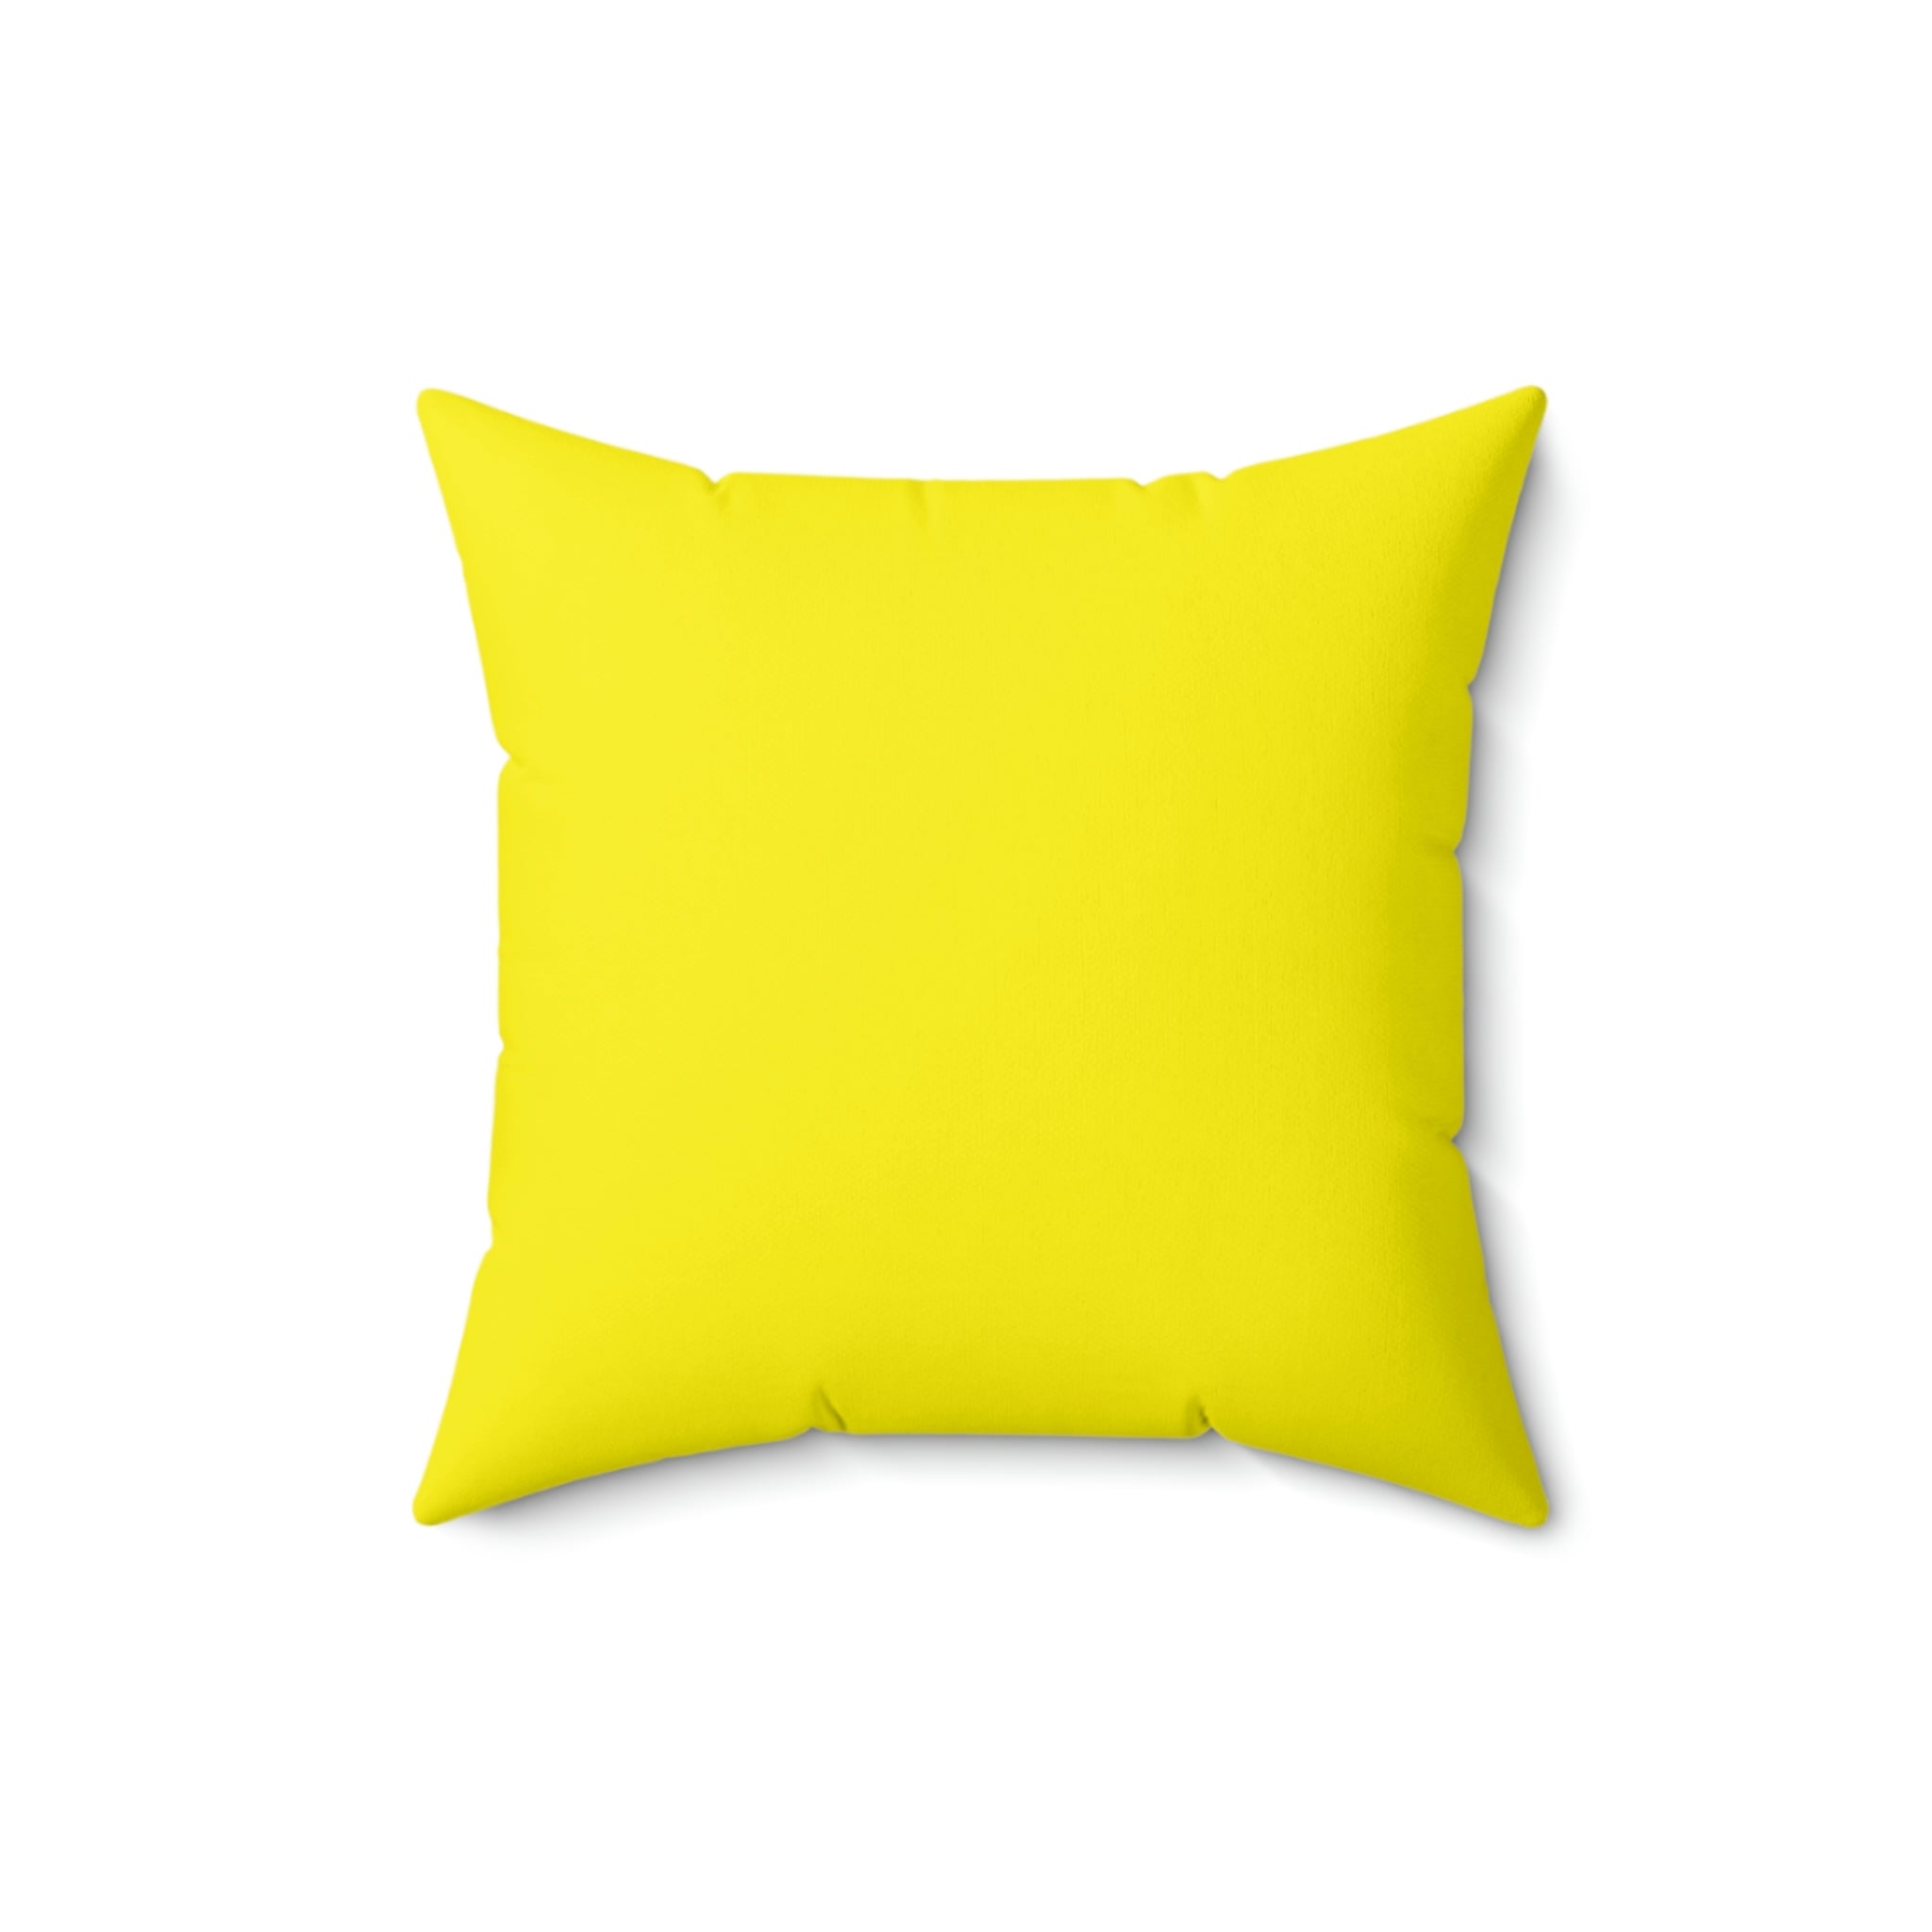 Spun Polyester Pillow Happy Face green/yellow